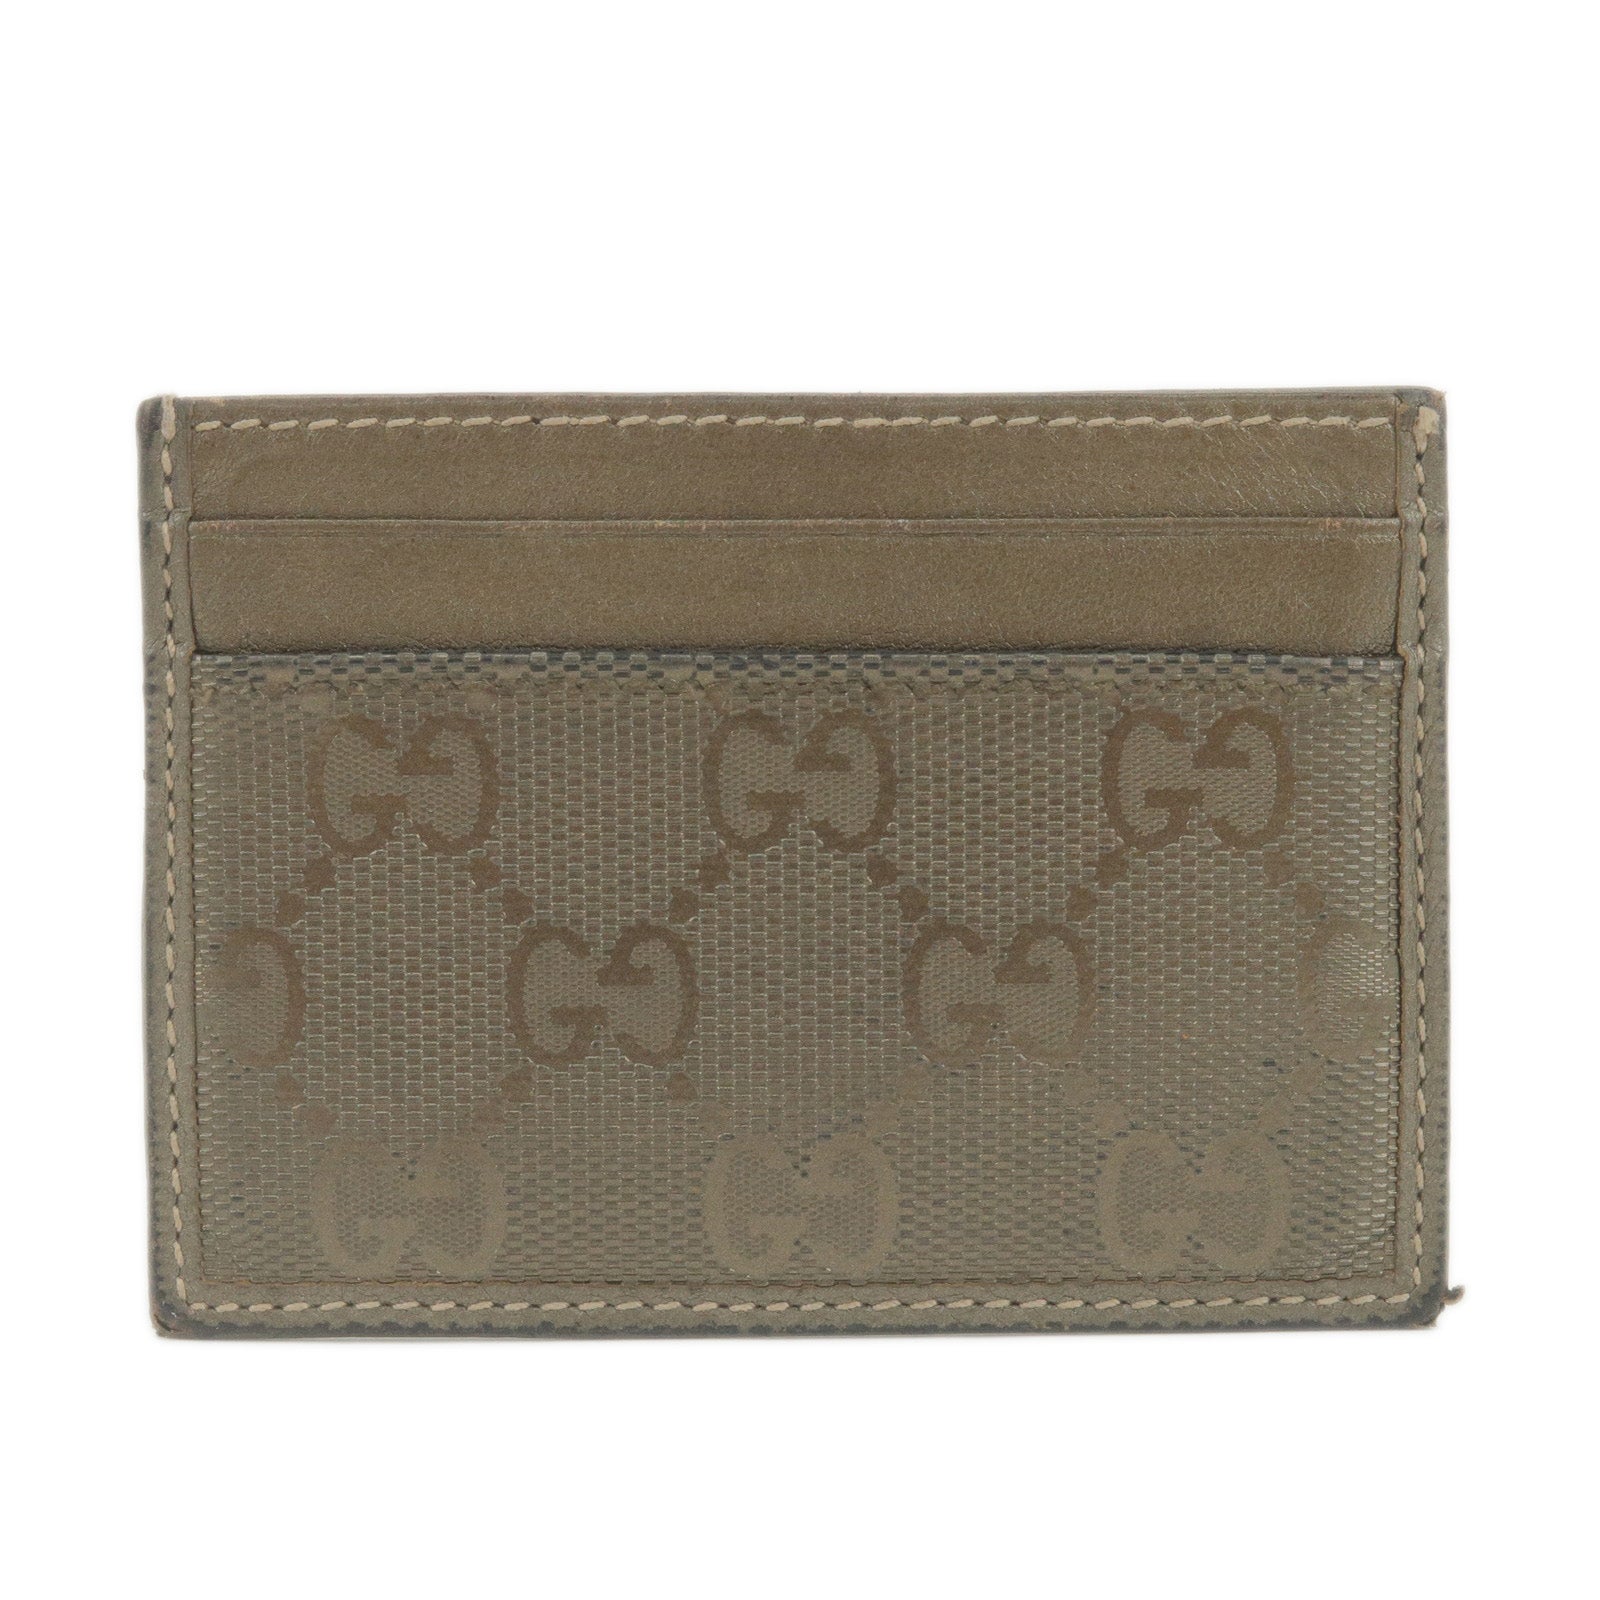 Gucci-GG-Imprime-Leather-Card-Case-Khaki-224125